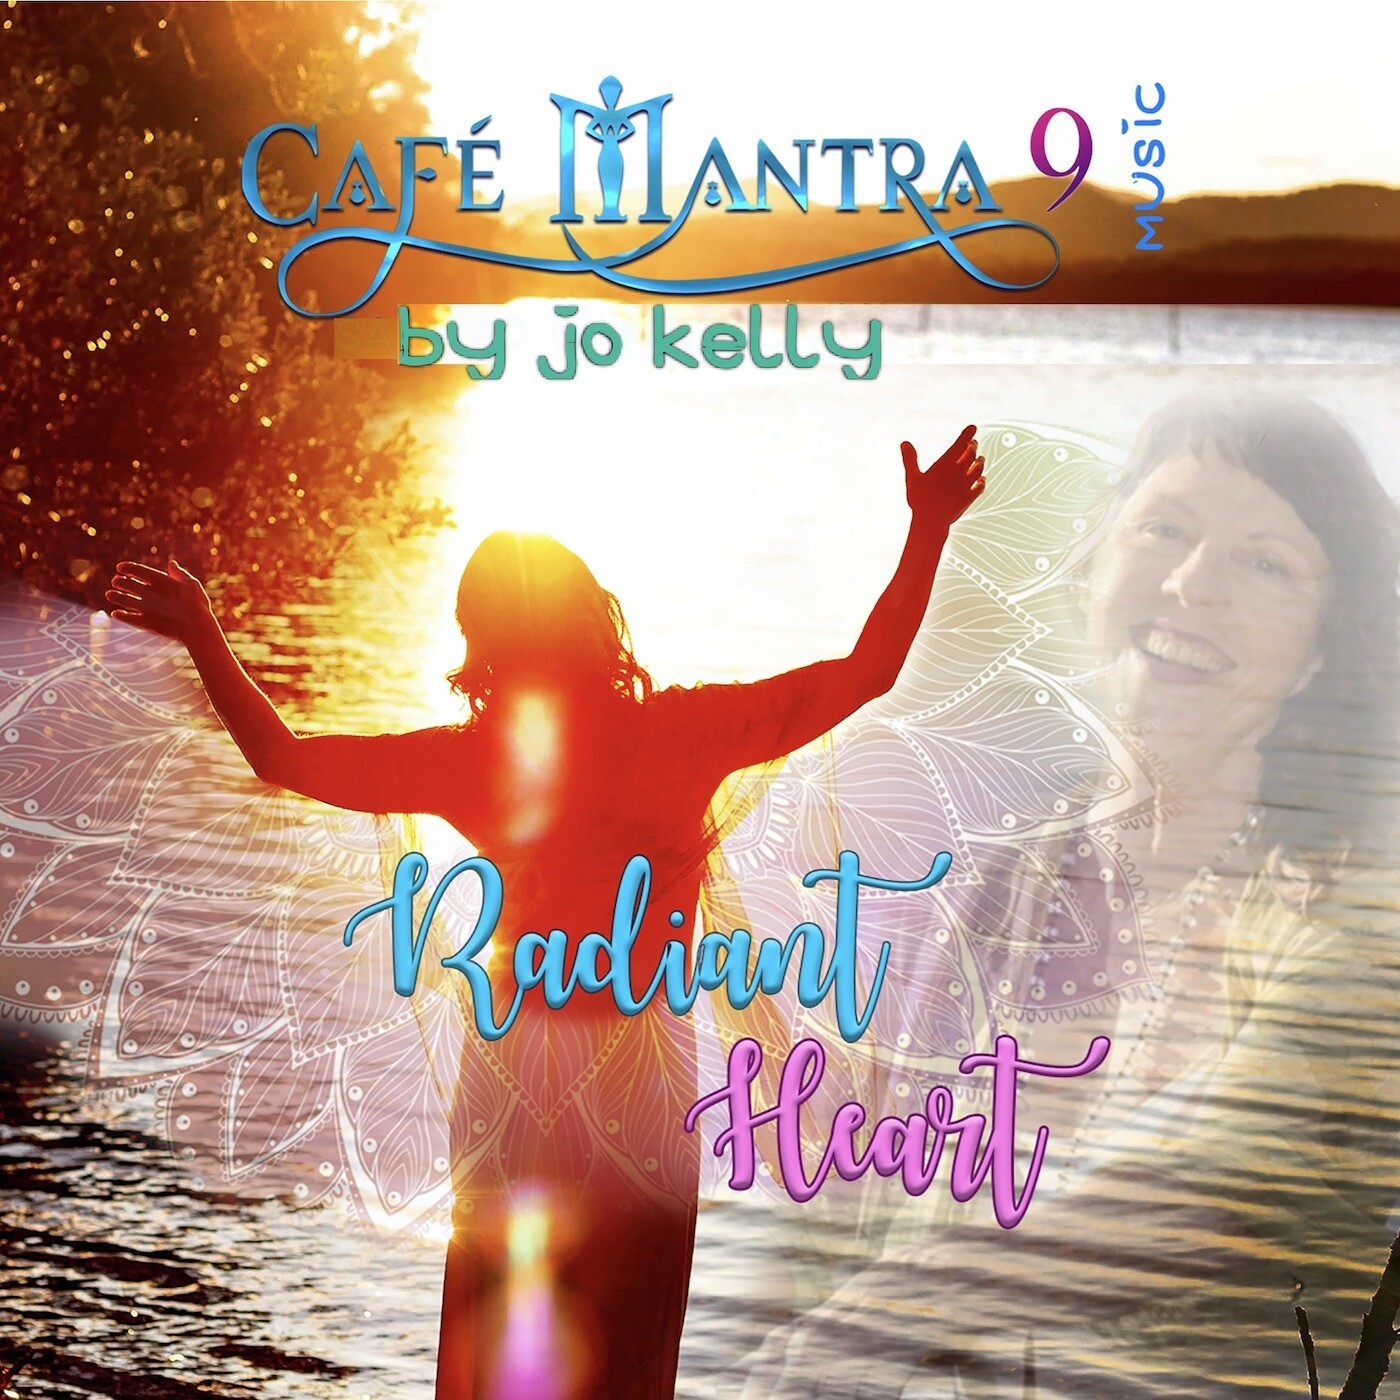 DOWNLOAD: Cafe Mantra Music 9 Radiant Heart